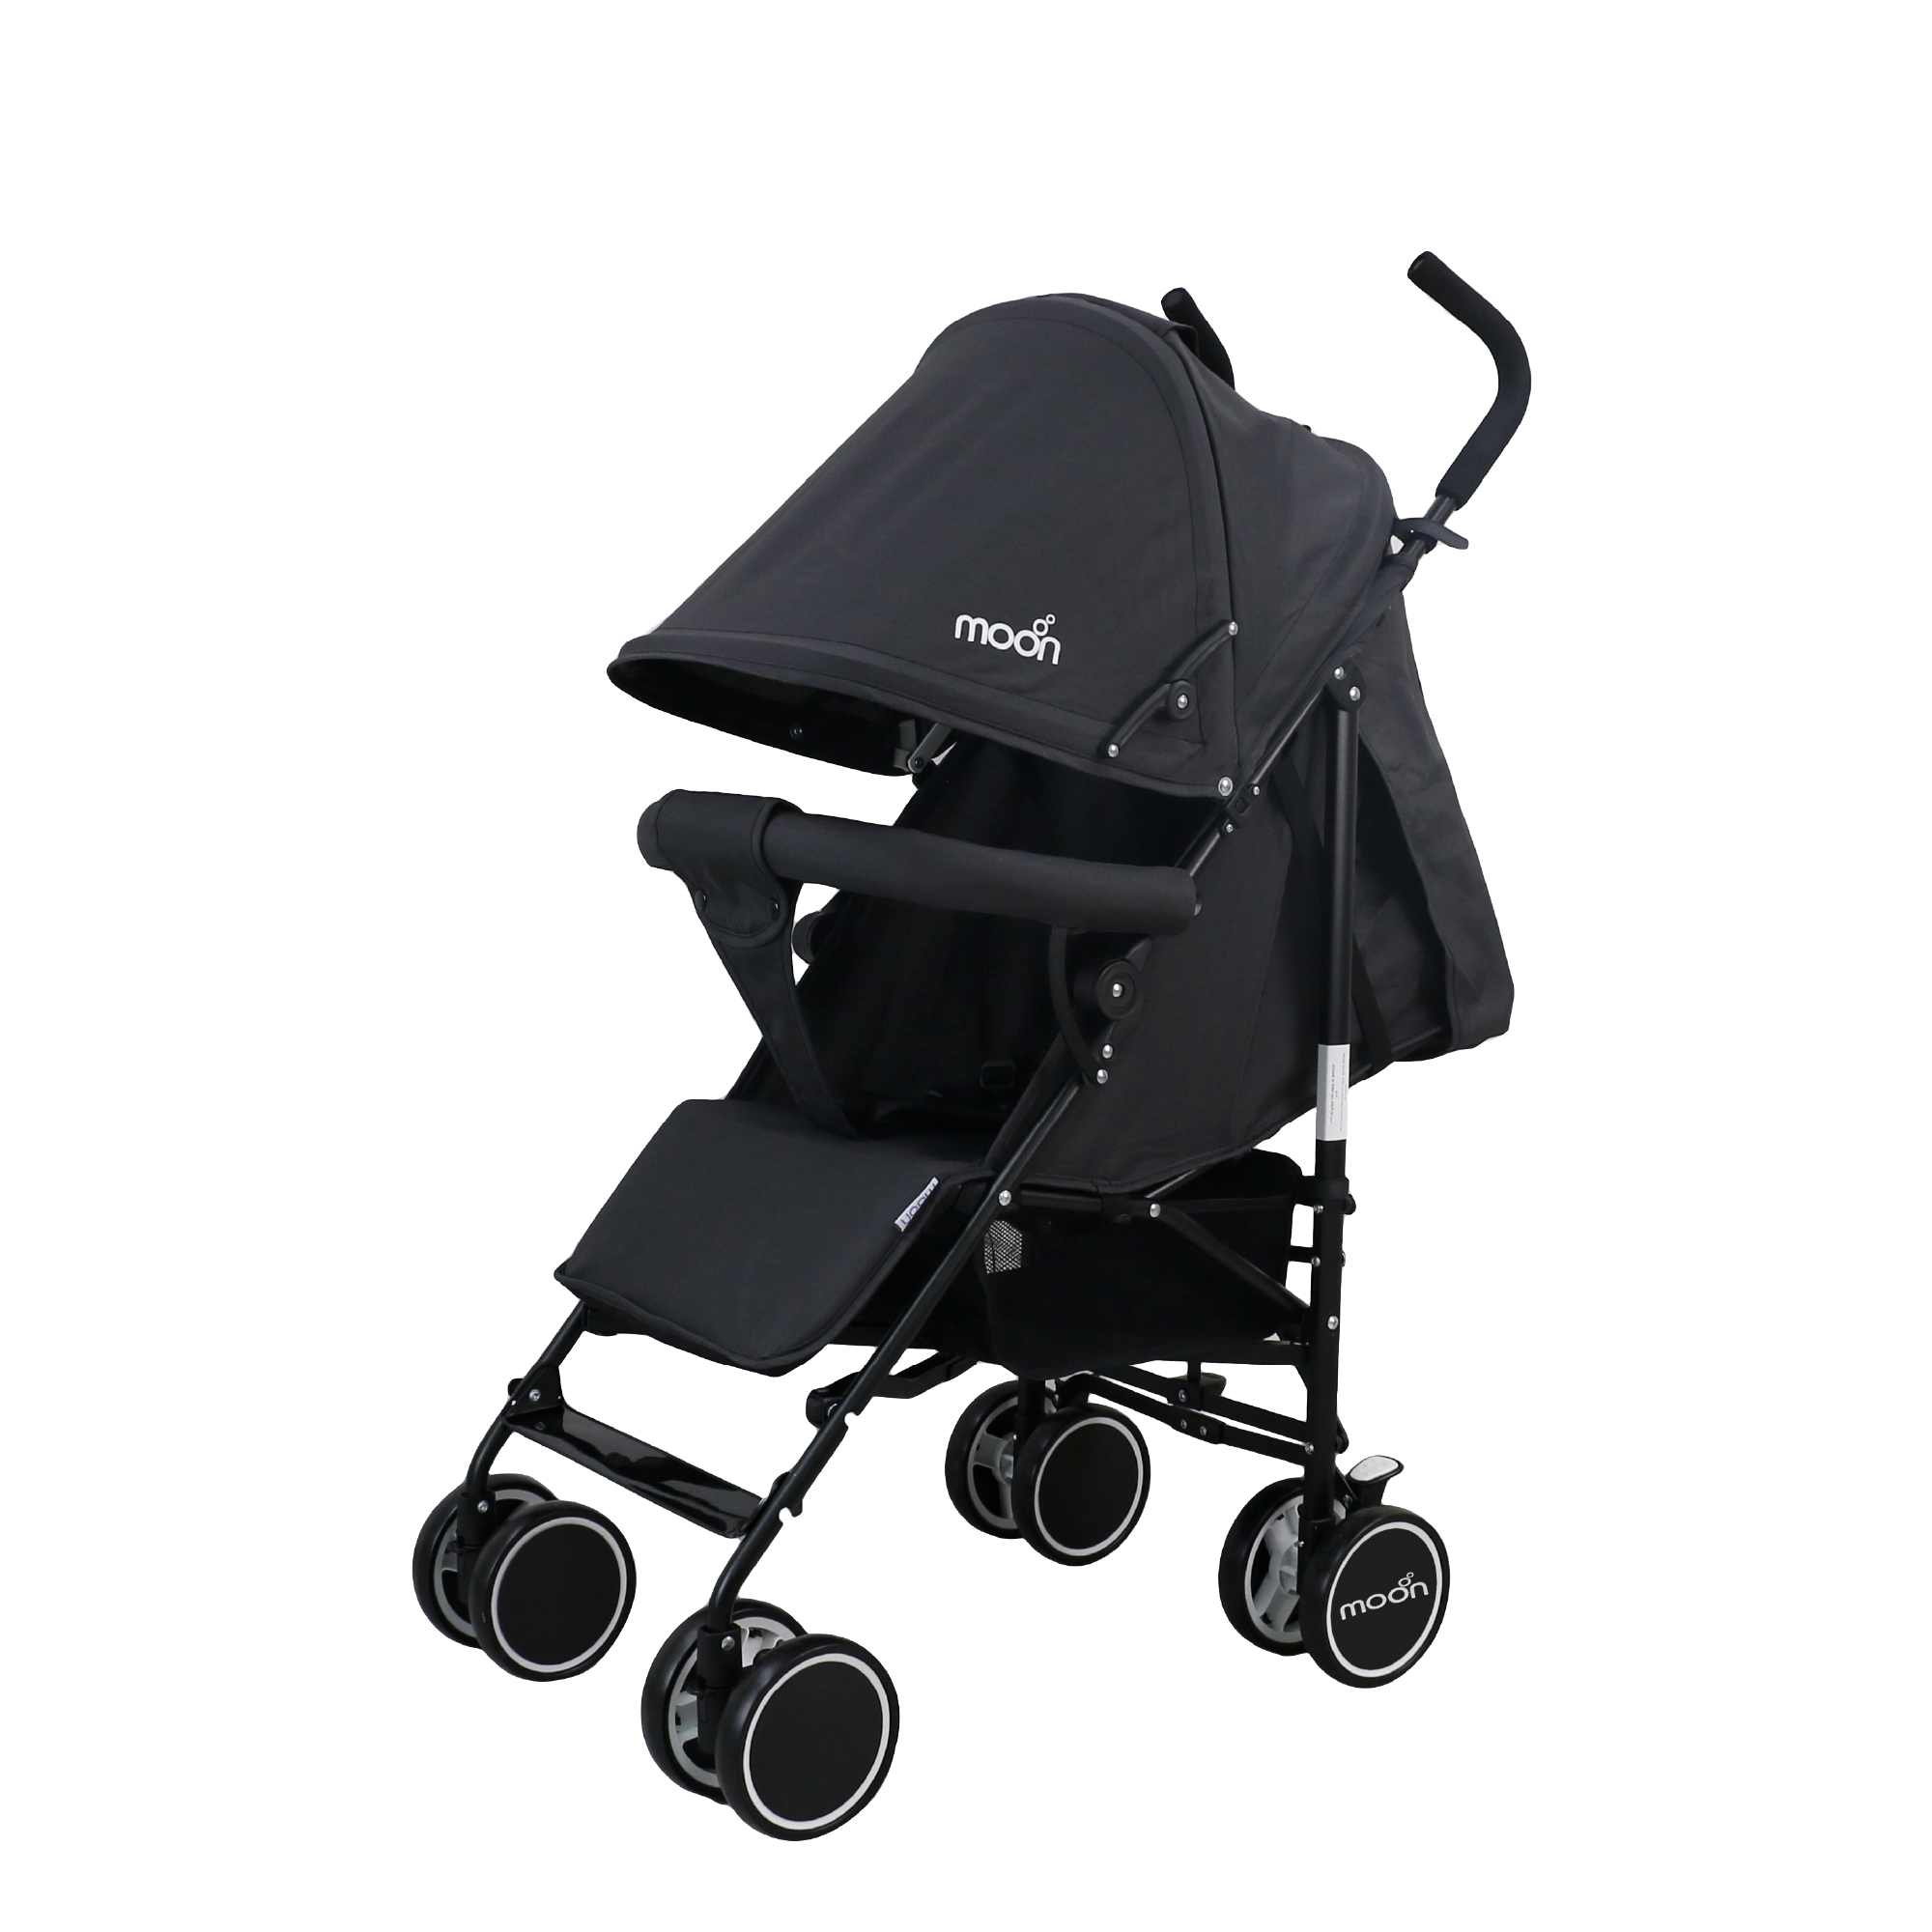 moon-neo-plus-light-weight-travel-stroller-black